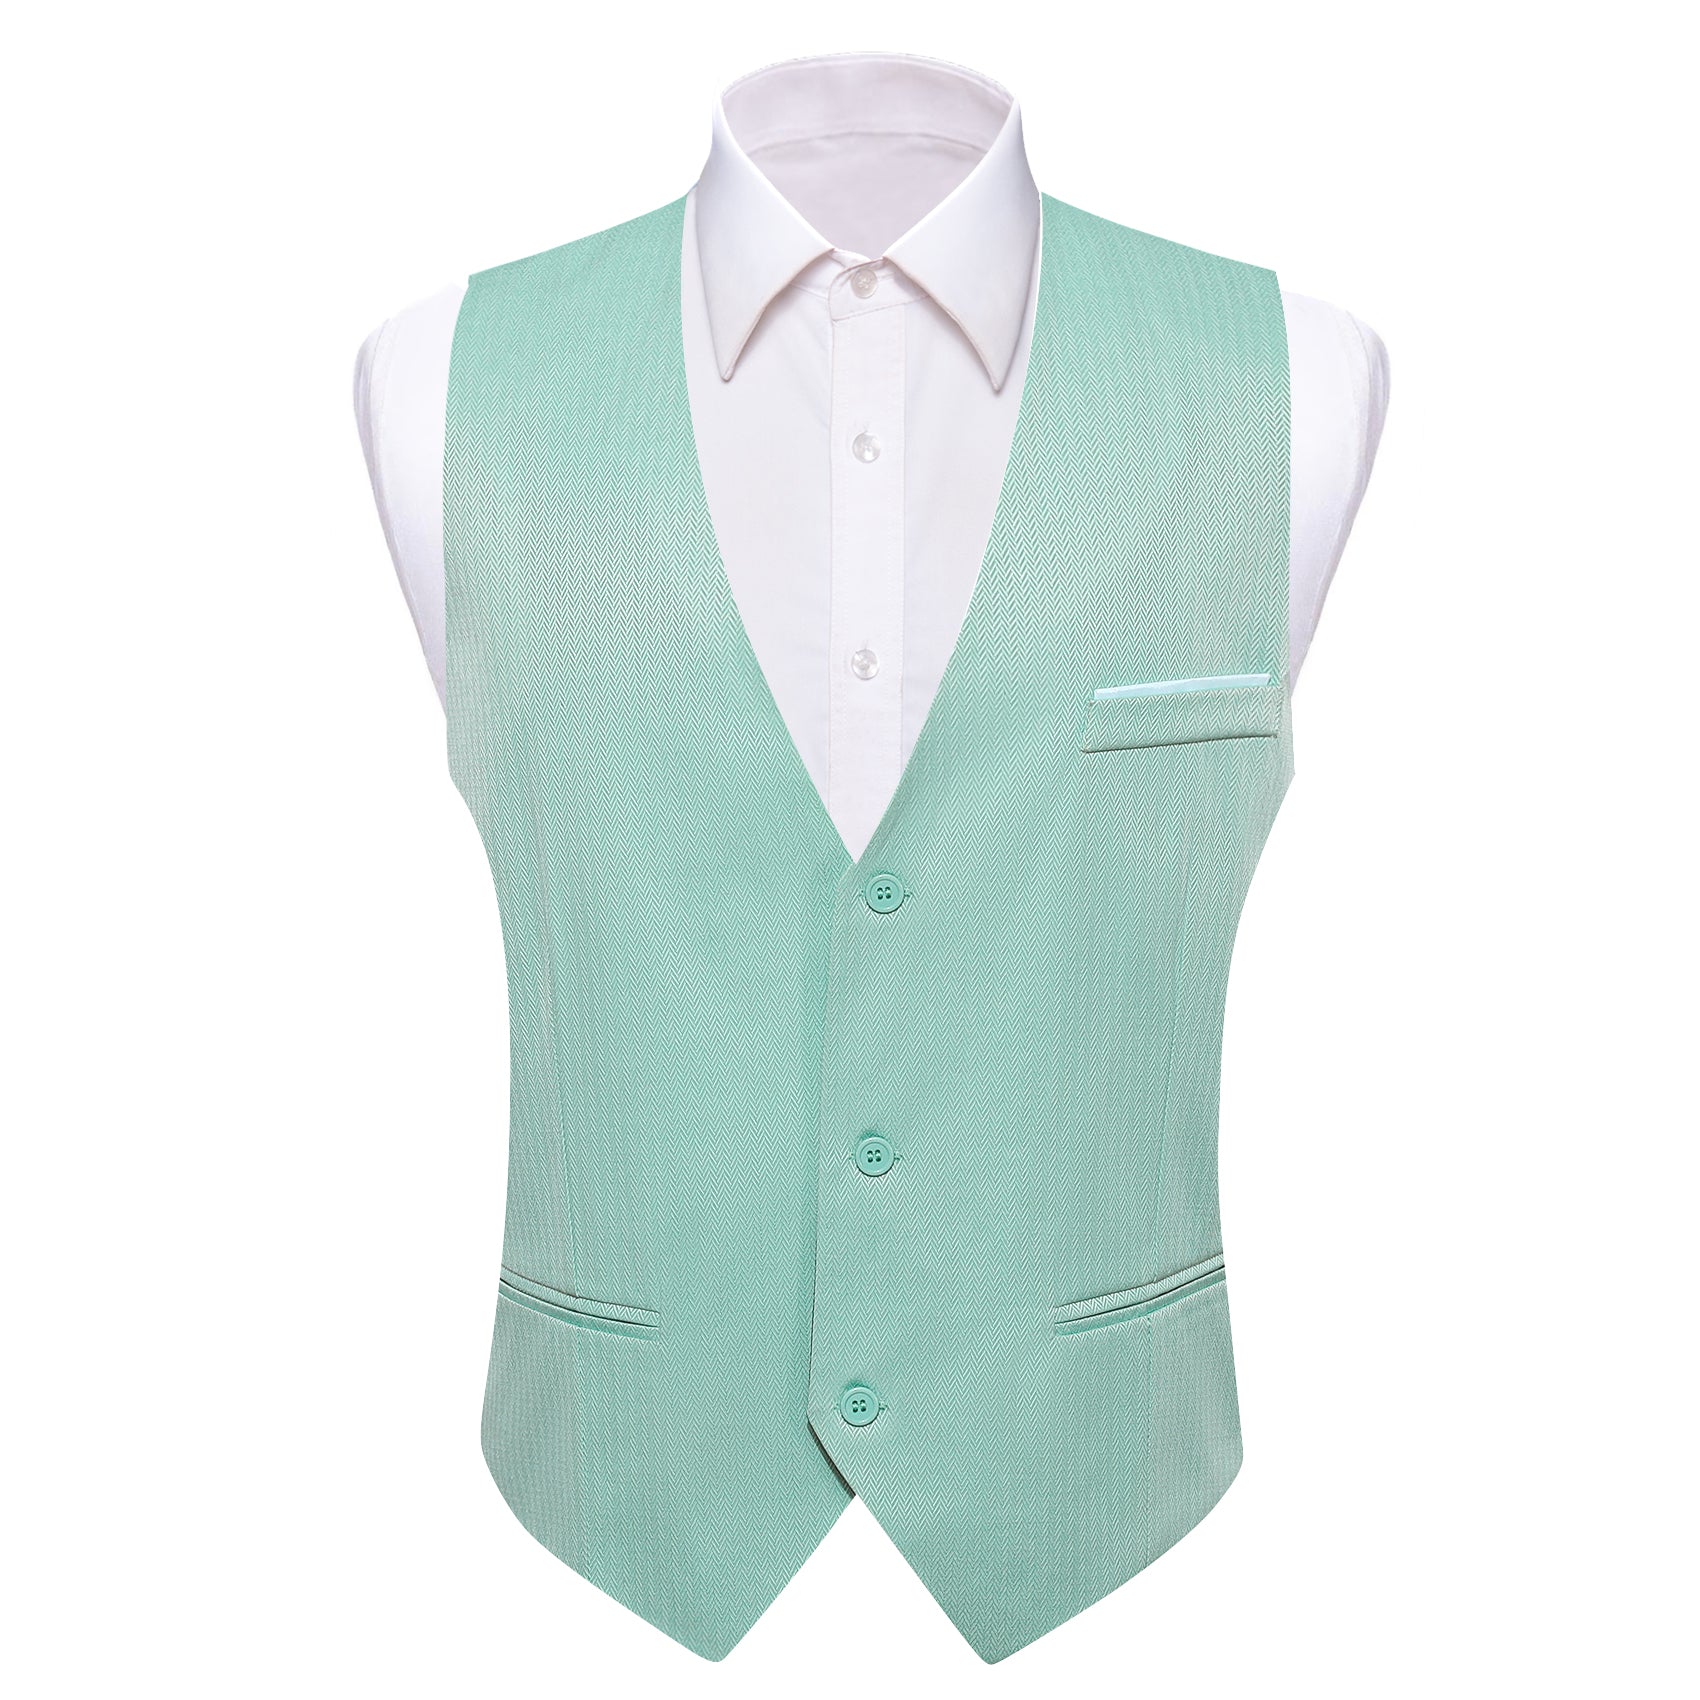 Barry.wang Men's Work Vest Light Green Solid Vest Dress Suit for Business